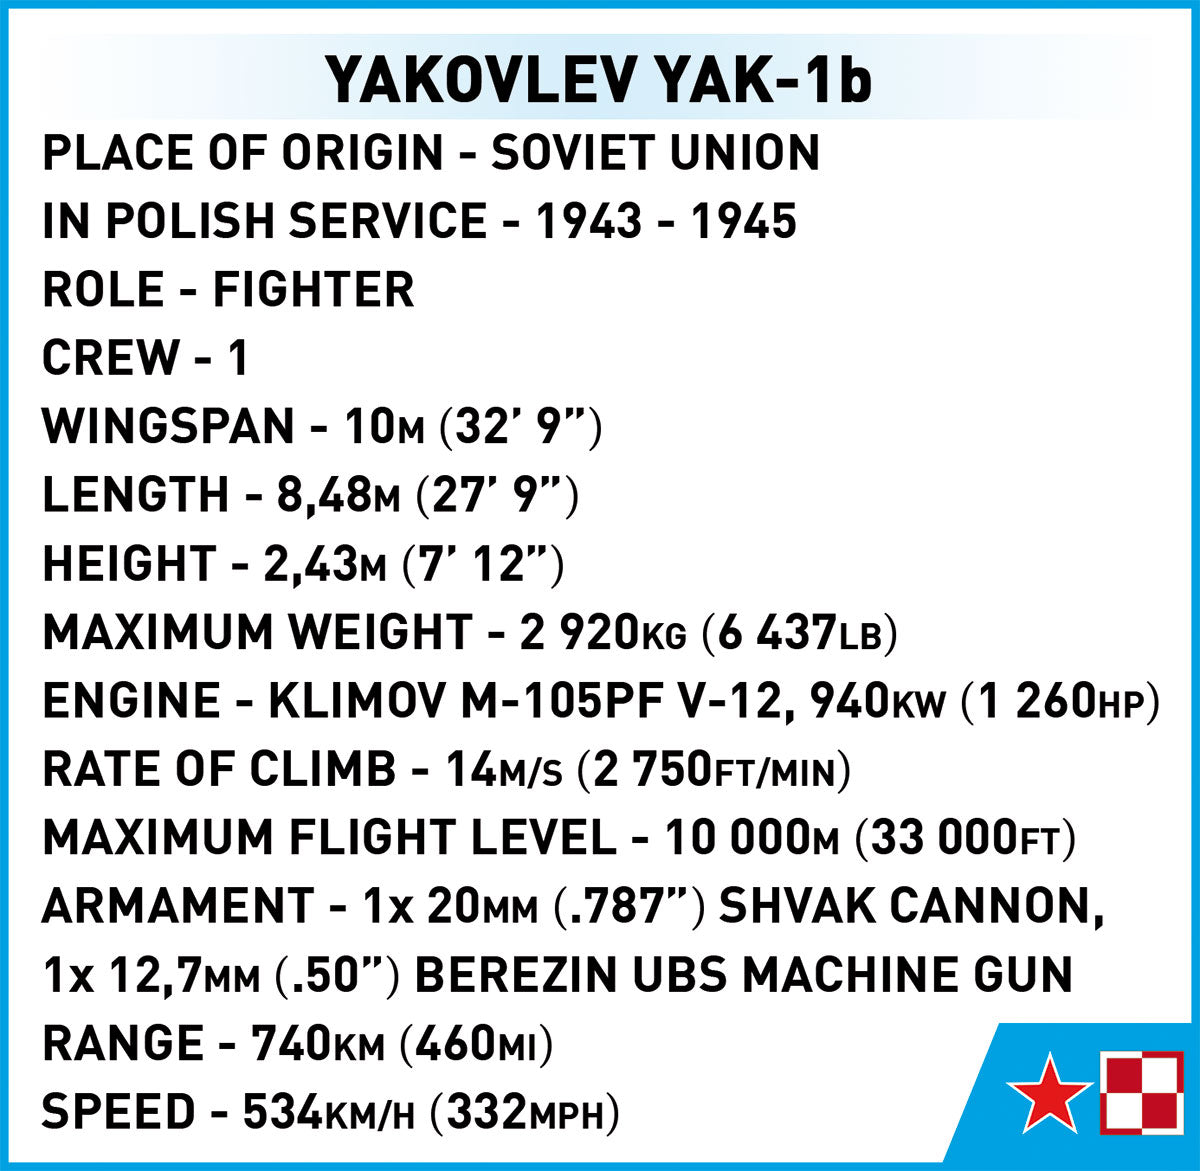 COBI Historical Collection WWII Yakovlev Yak-1b